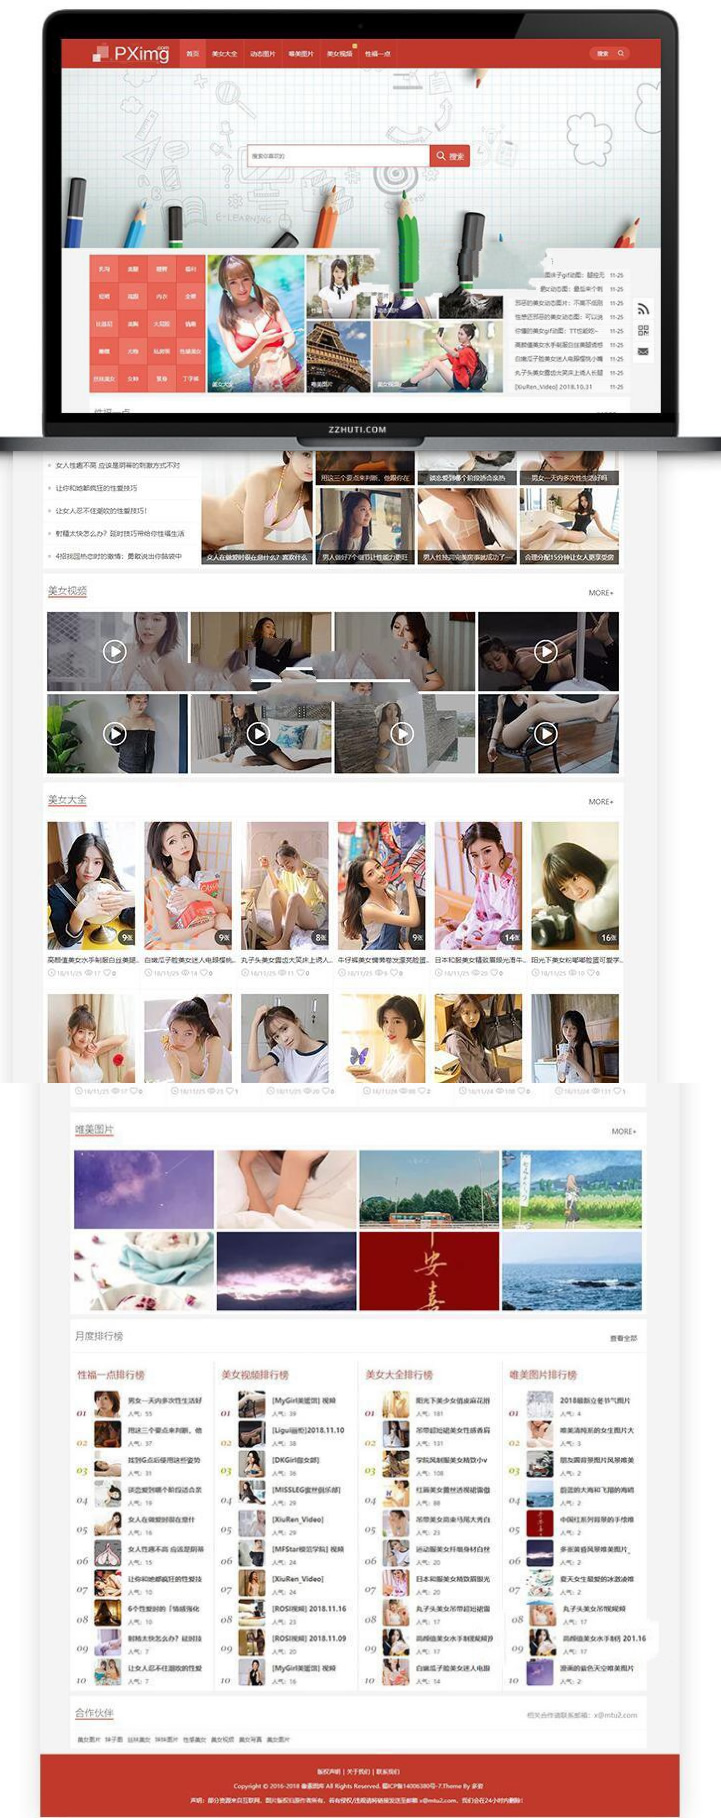 K145 美女私房照图片网站源码 CMS主题最新修复版 WordPress模板